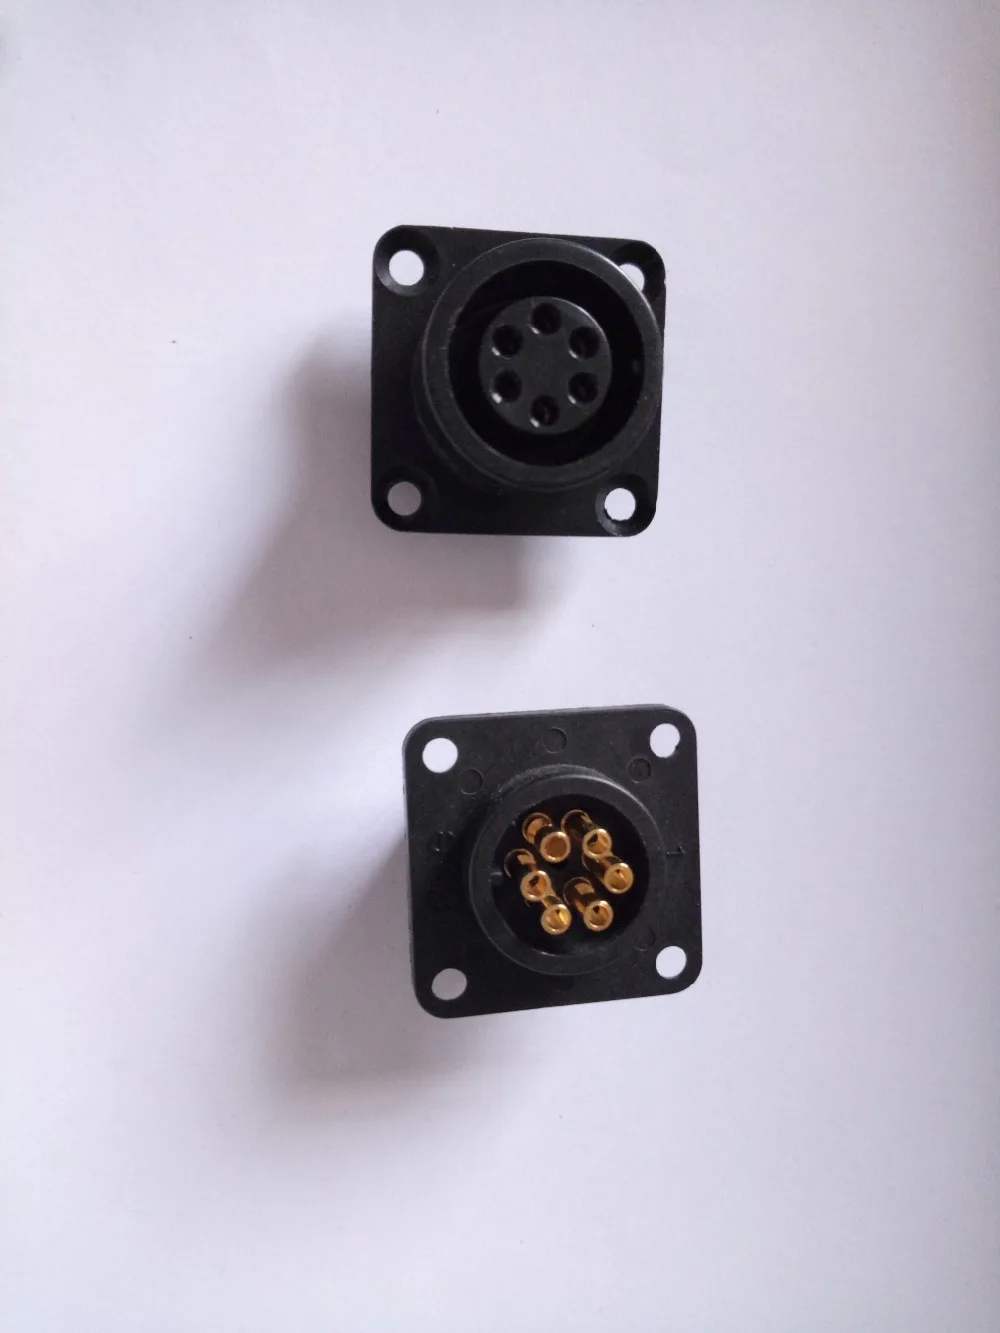 Free Shipping kmtkeramed for Round 6-pin socket, Black, Plastic, Flange: 30X30cm,5pcs